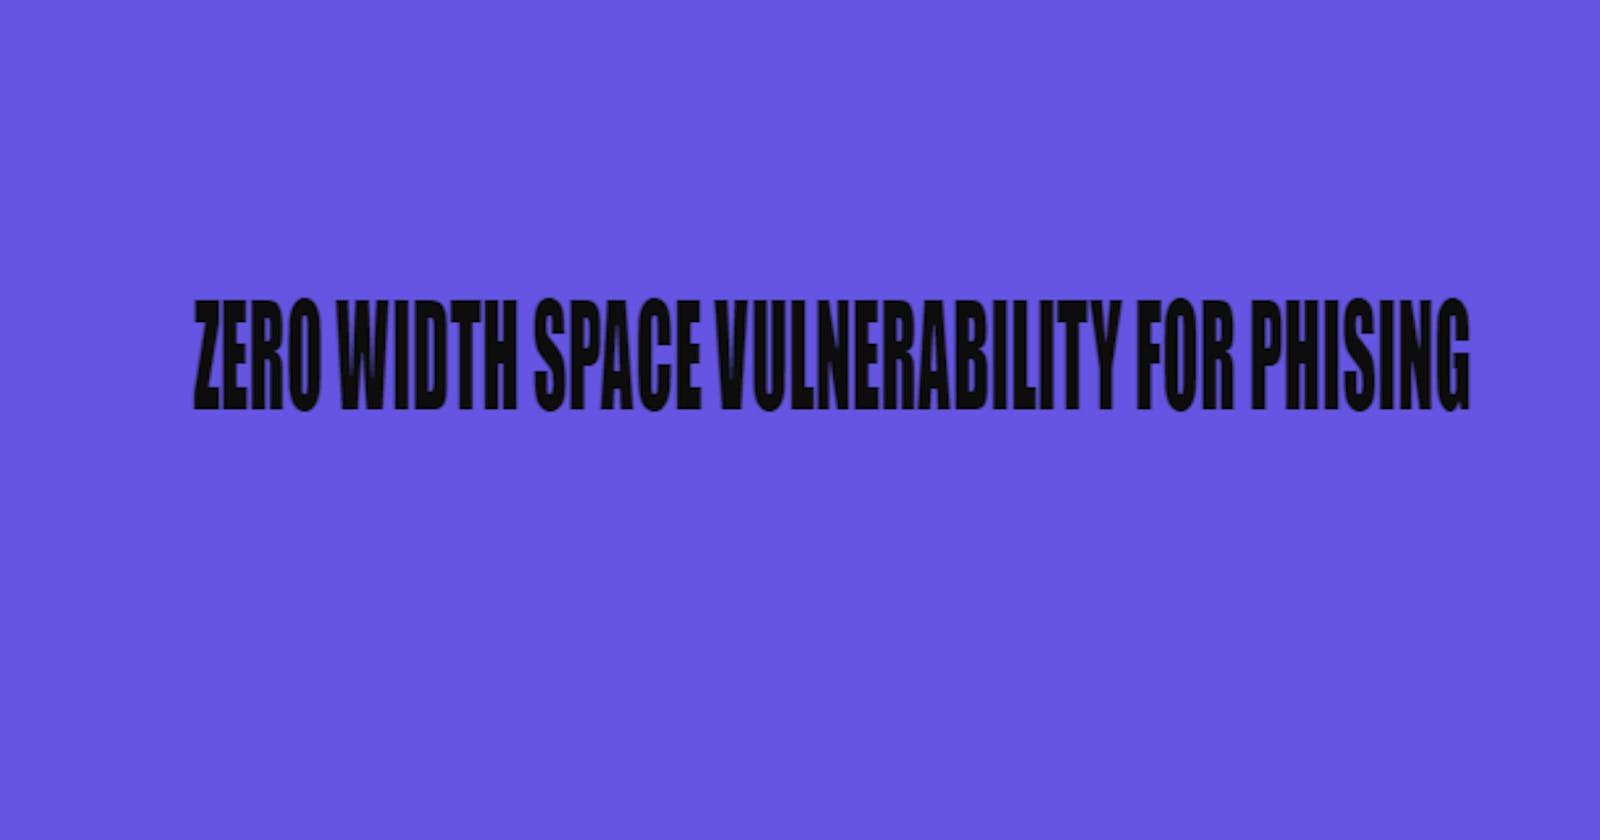 Zero-Width Space (ZWSP) Vulnerability for phishing